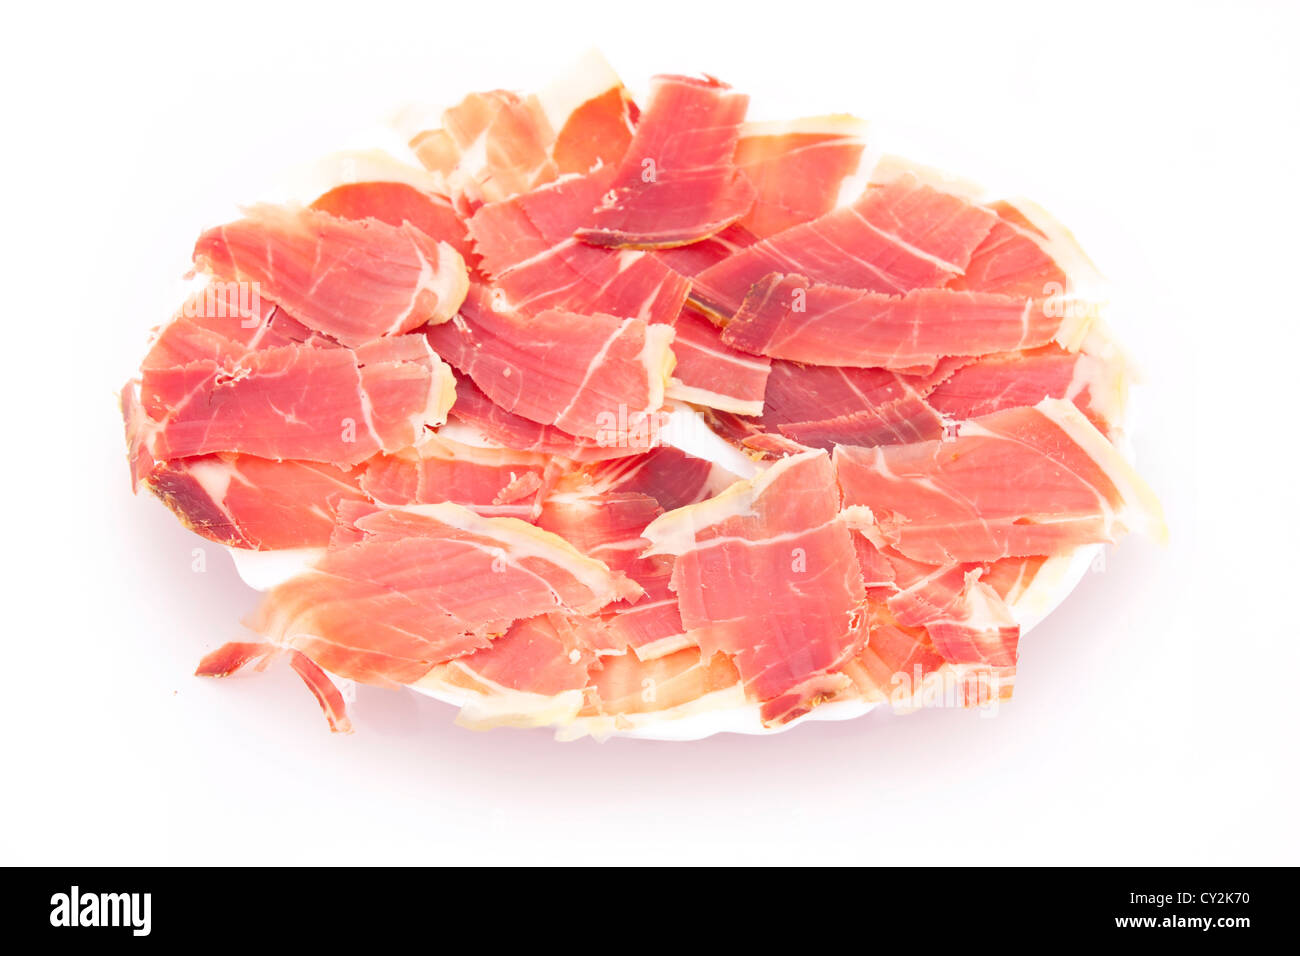 Delicious plate full of iberian ham. Serrano ham. Stock Photo